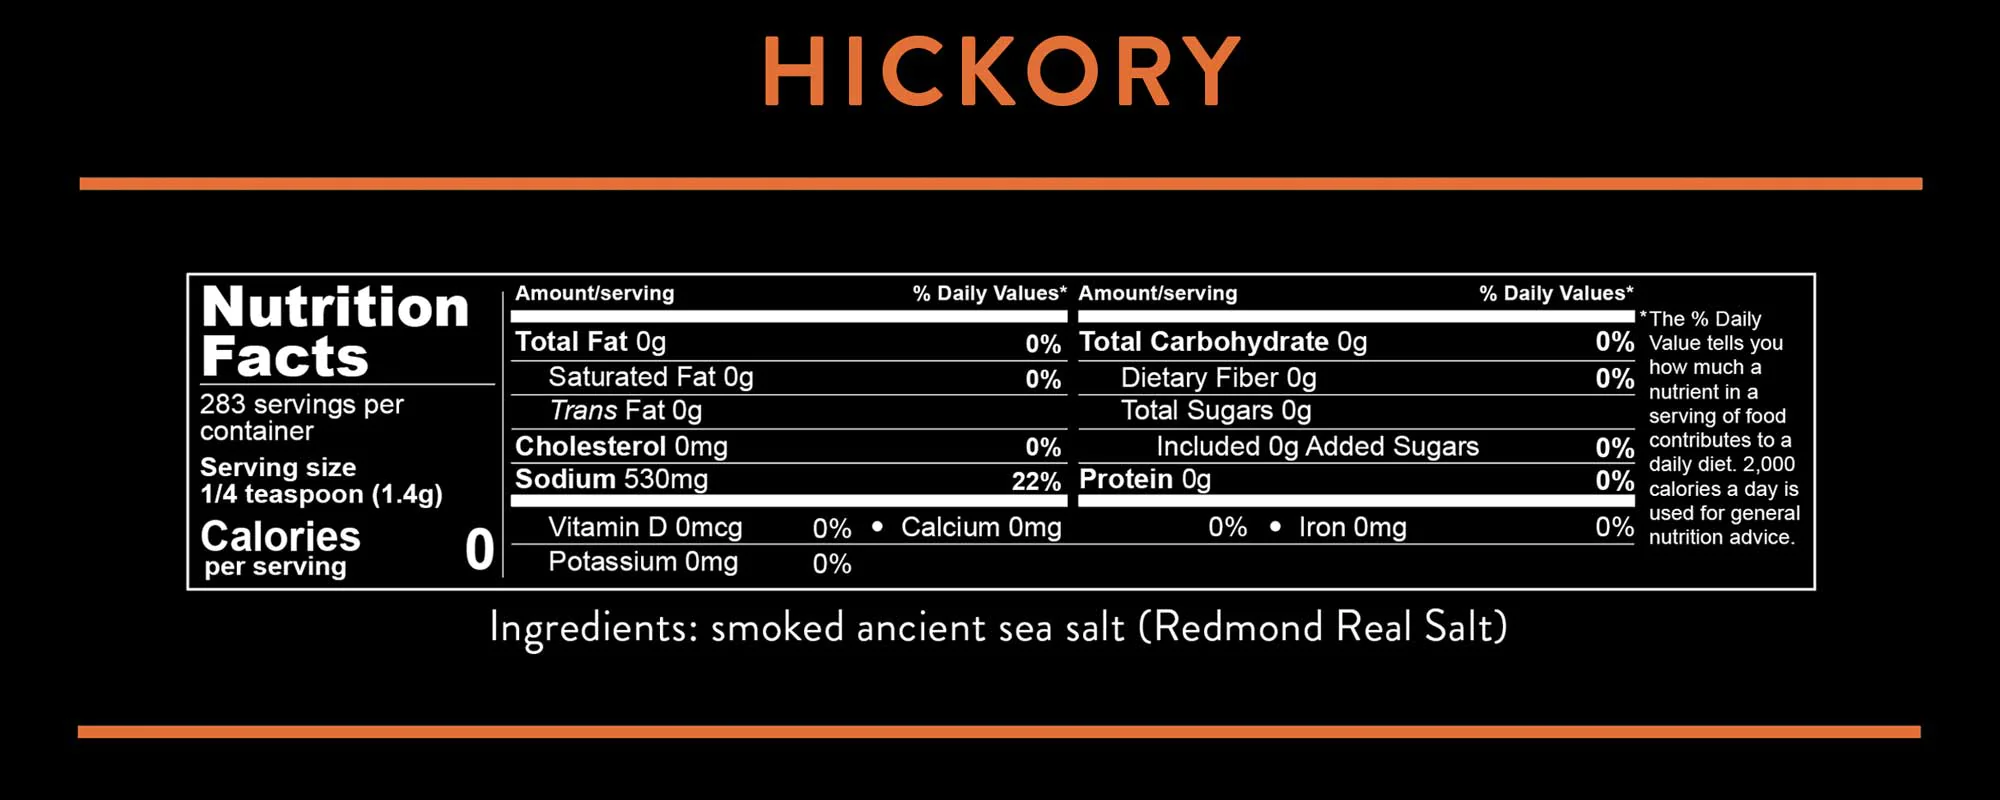 Hickory ingredients: smoked ancient sea salt (Redmond Real Salt)